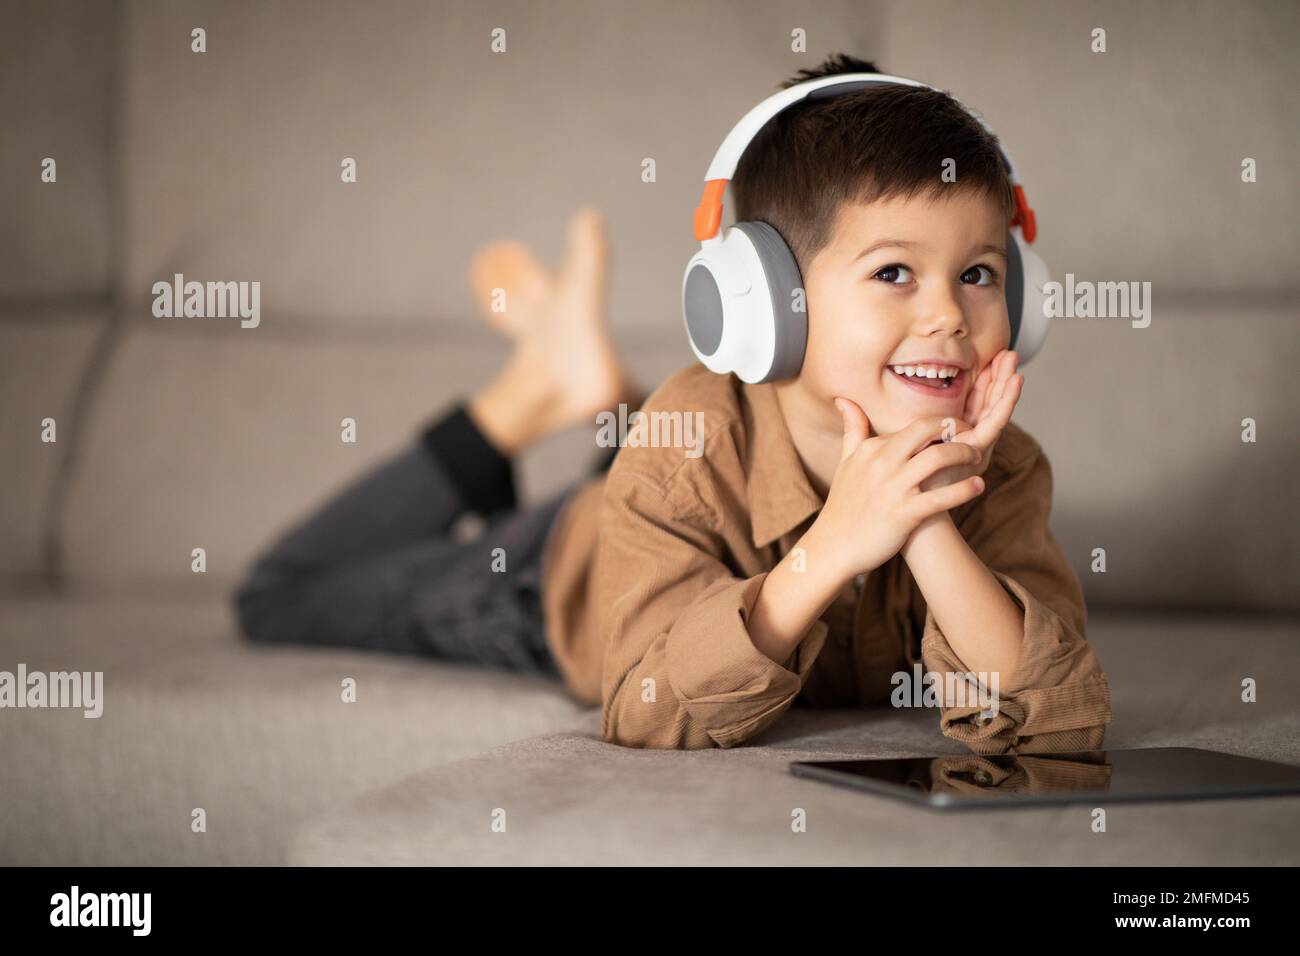 Happy pensive little boy in wireless headphones thinks, creative idea, watching video on tablet, lies on sofa Stock Photo